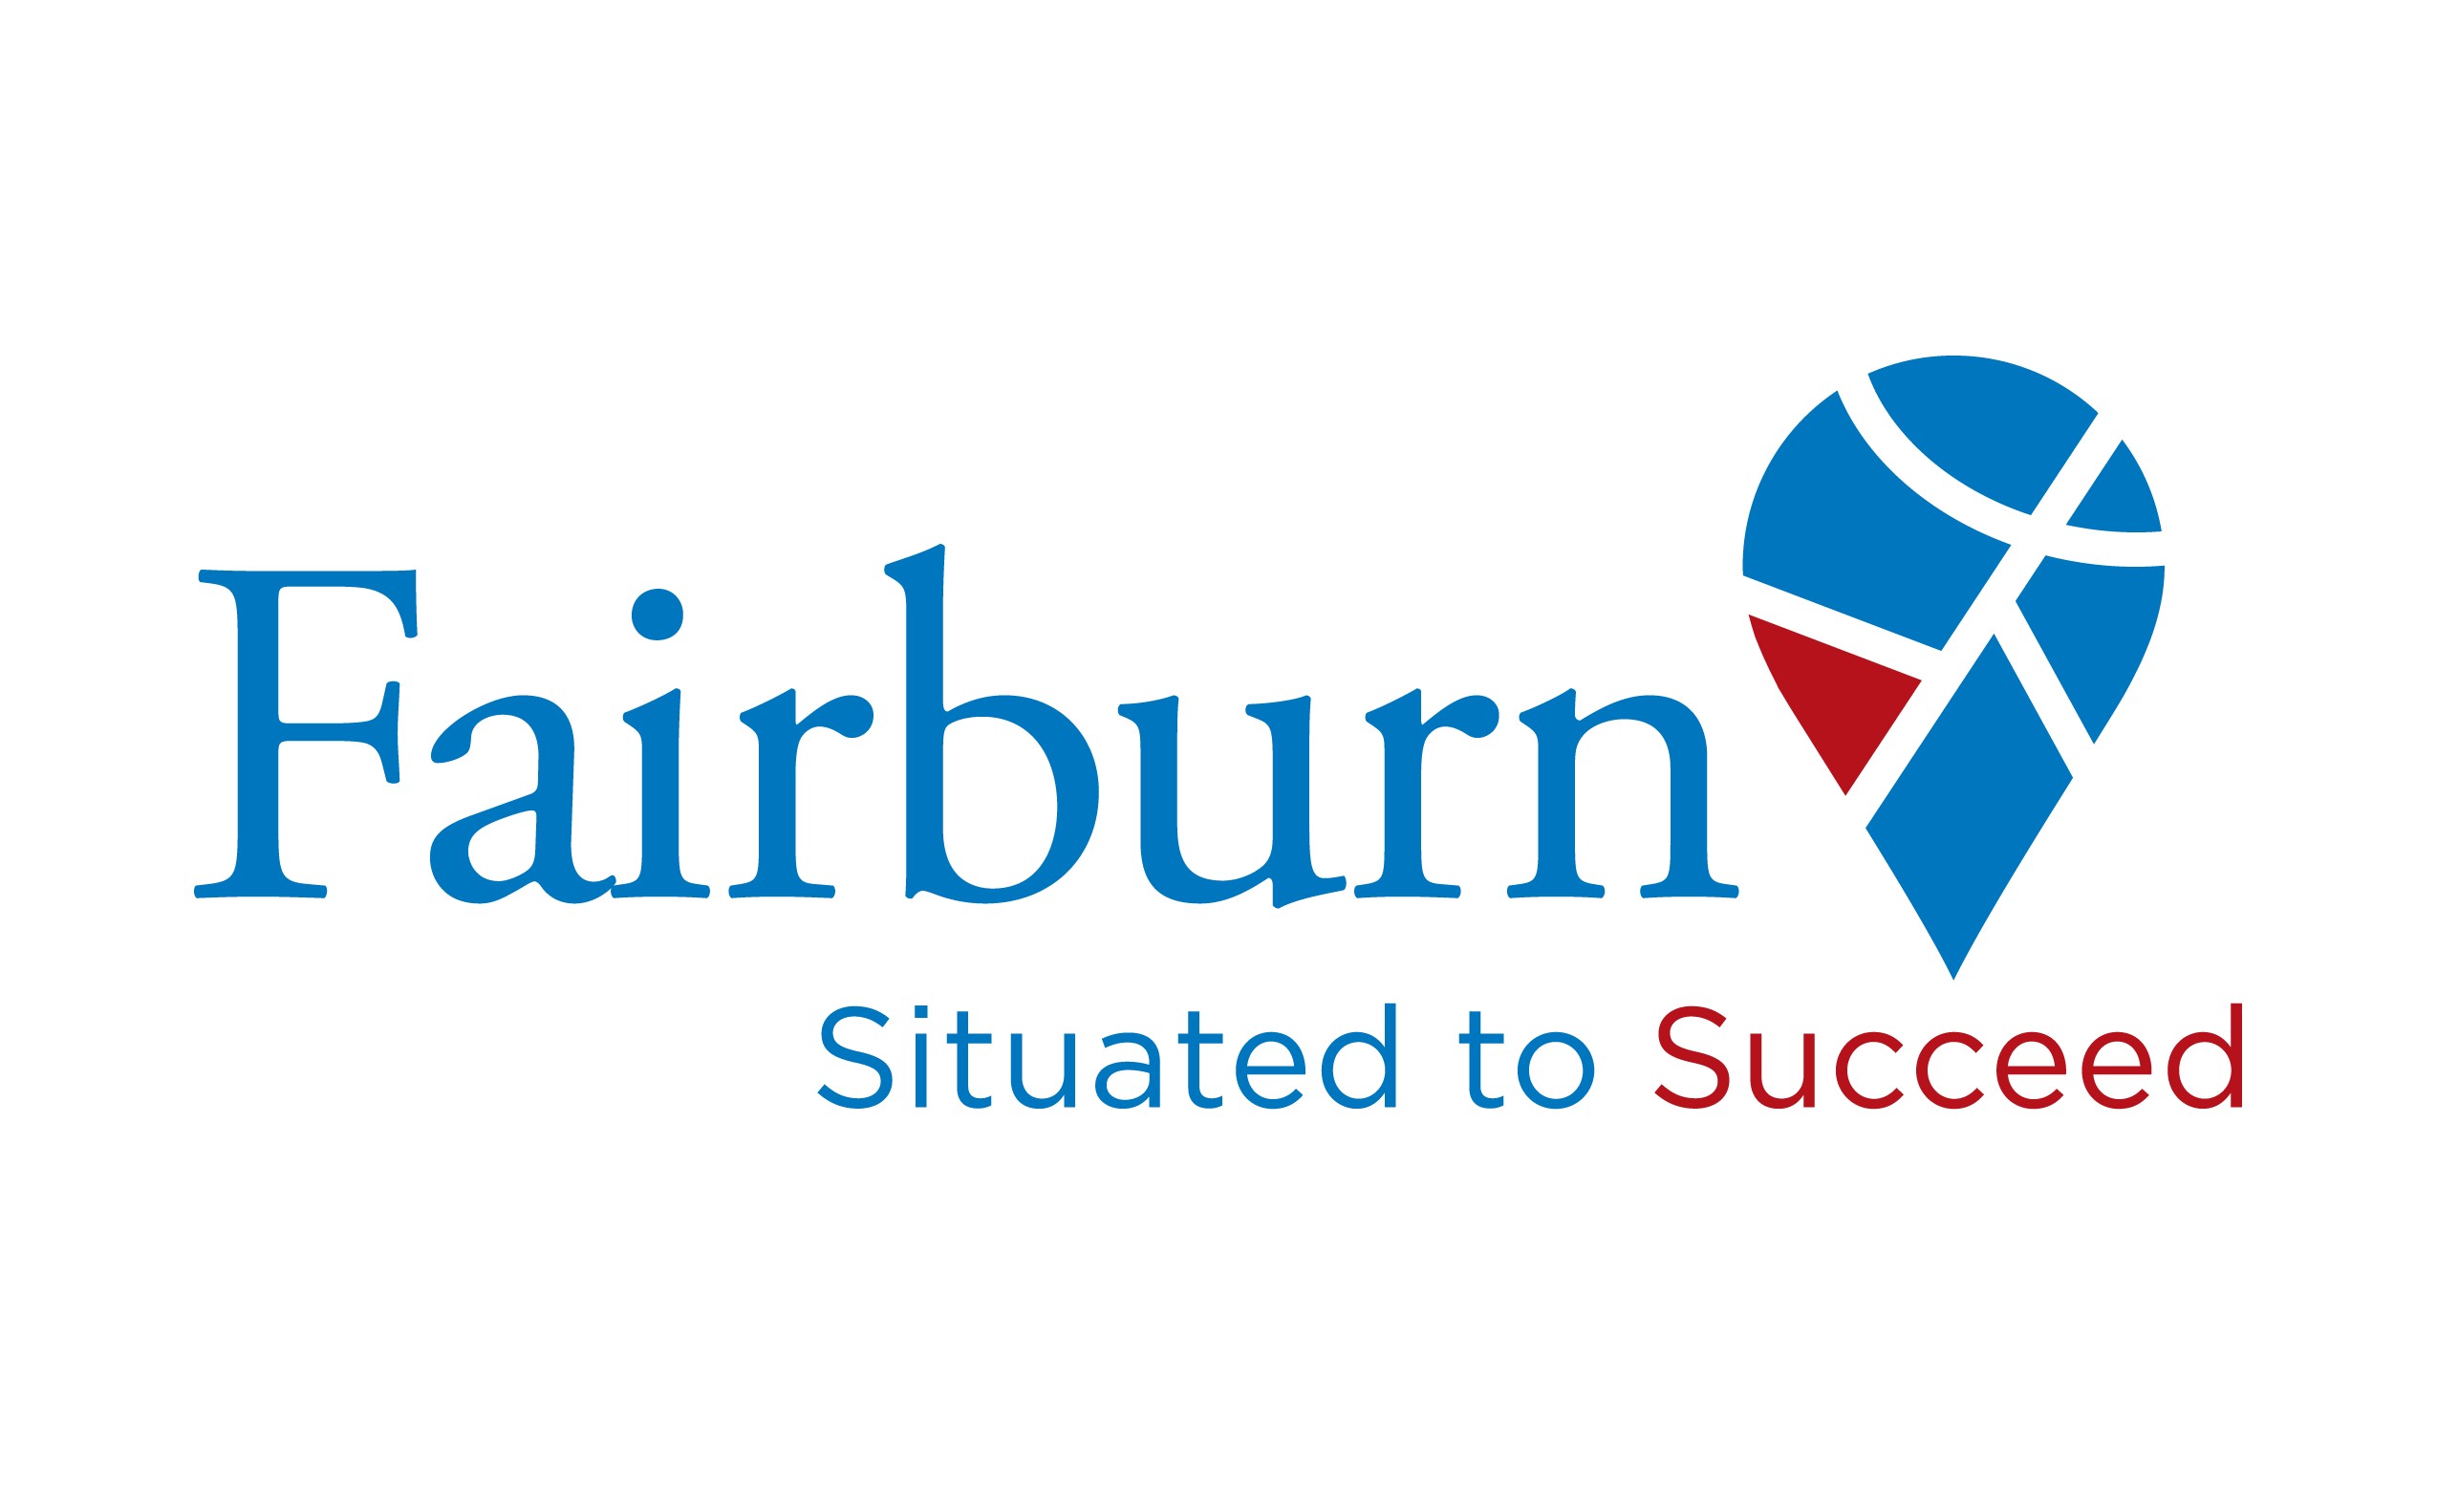 Organization logo of City of Fairburn